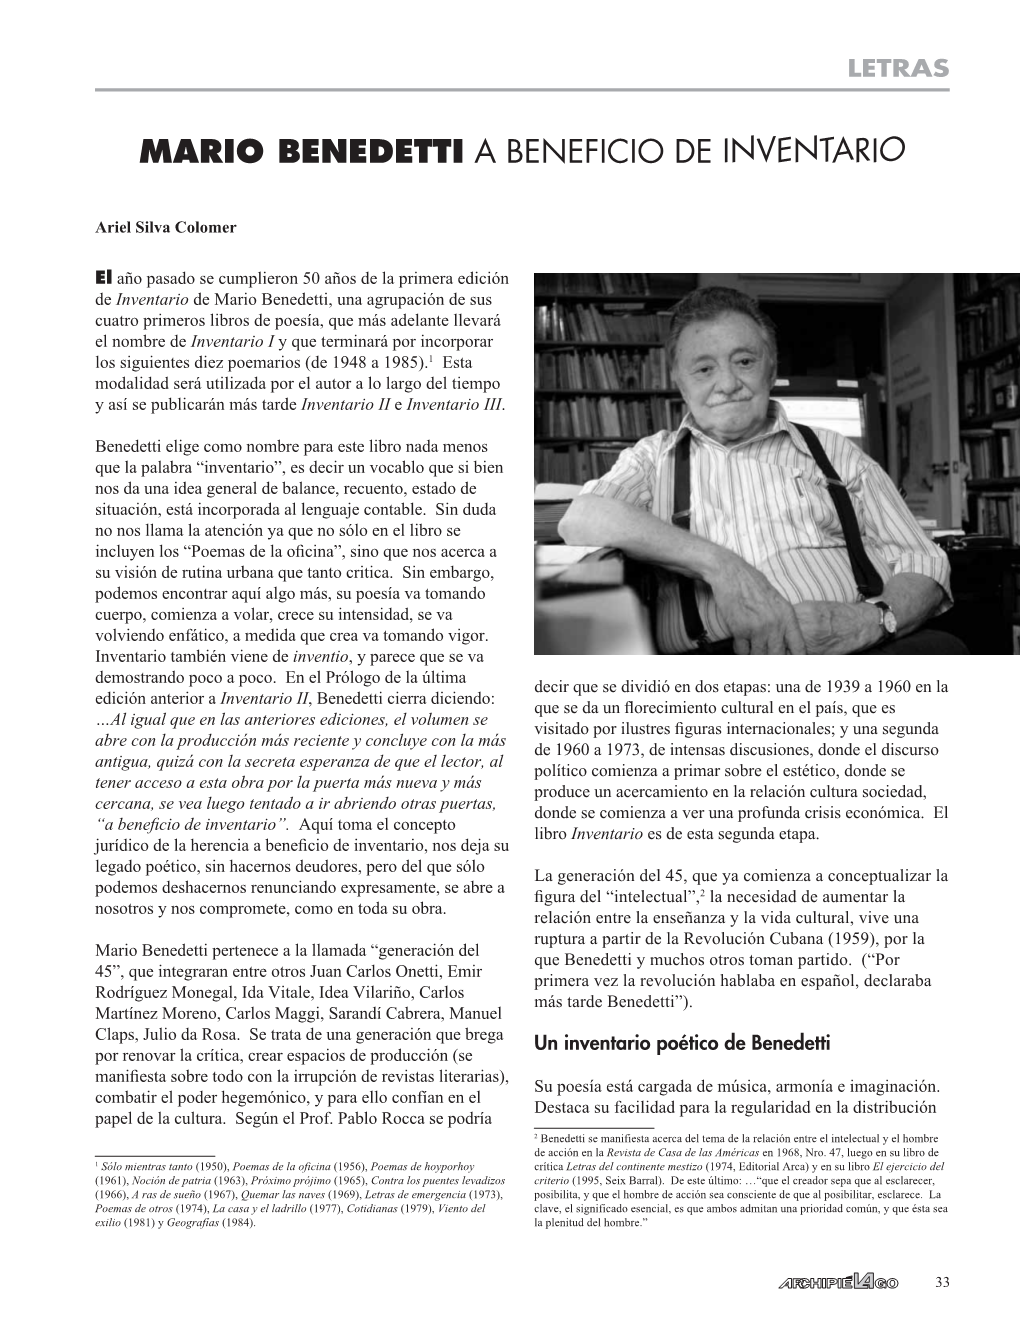 Mario Benedetti a Beneficio De Inventario